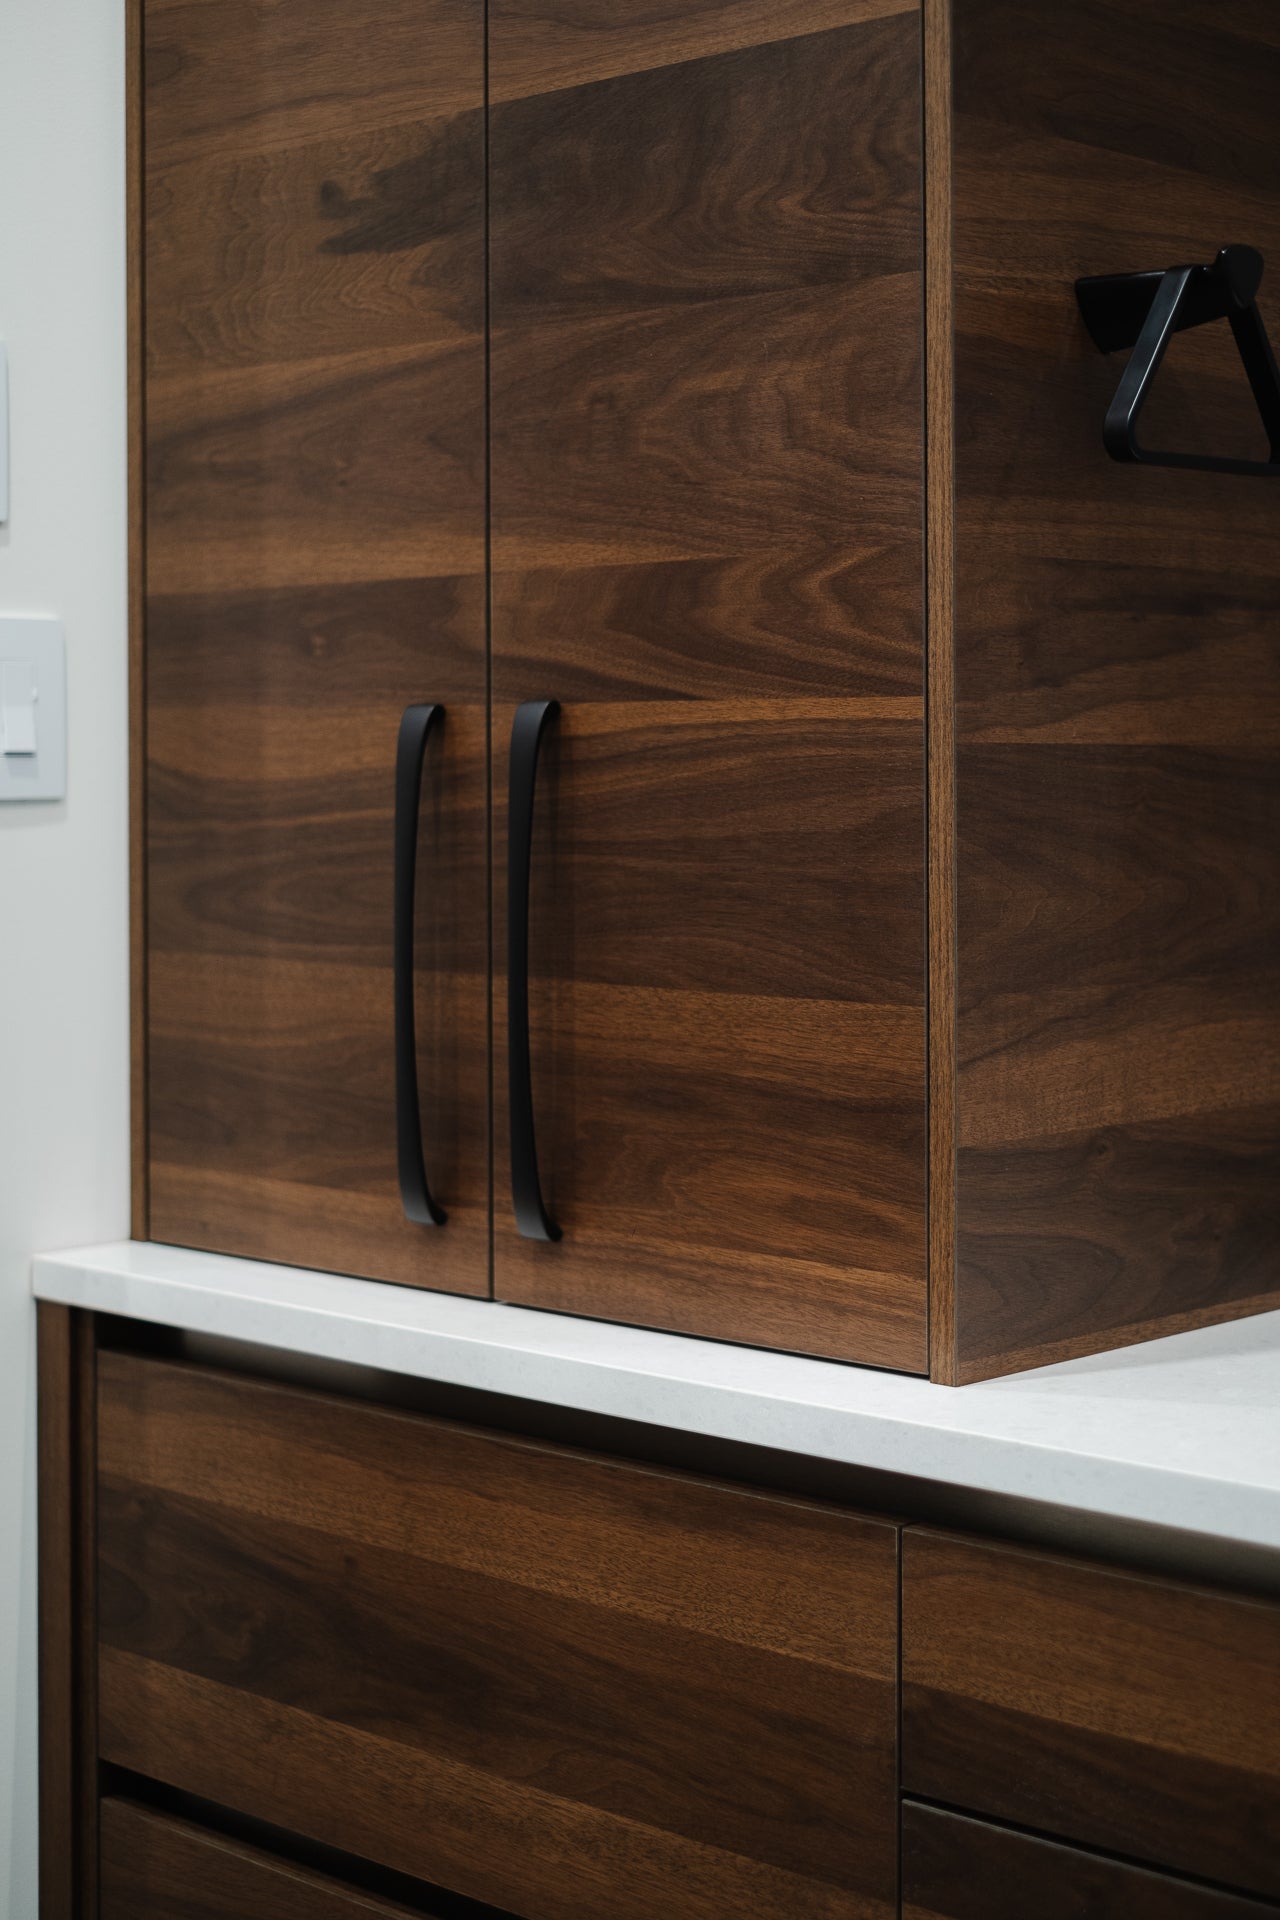 Shinnoki - wood cabinet - wooden cabinet - wood cabinet kitchen - wood kitchen - wooden kitchen - dark wood cabinet